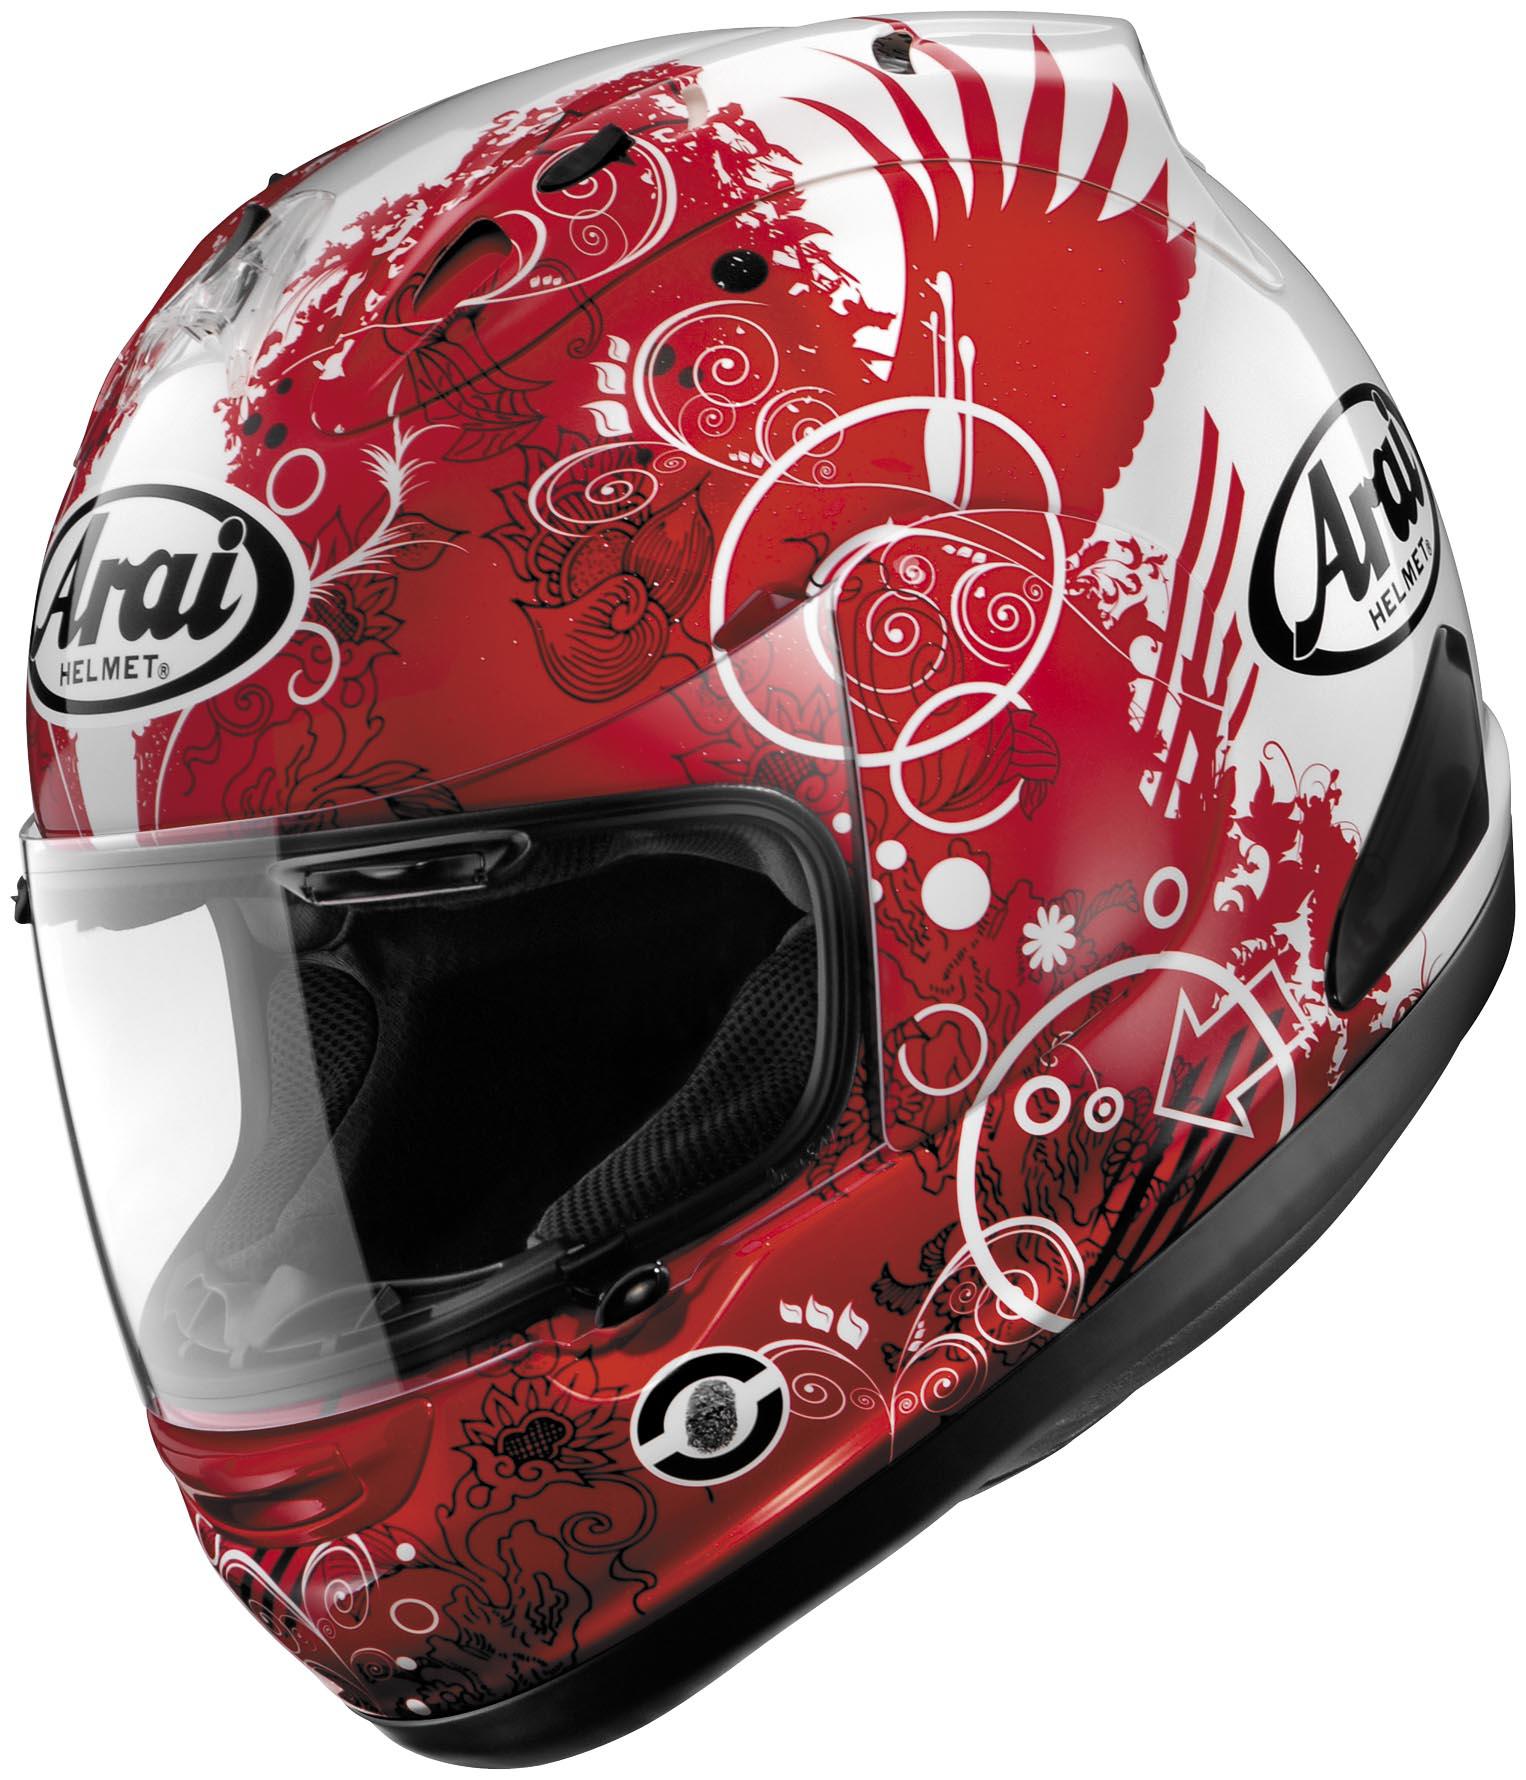 Arai corsair v fiction graphics motorcycle racing performance dot helmet new